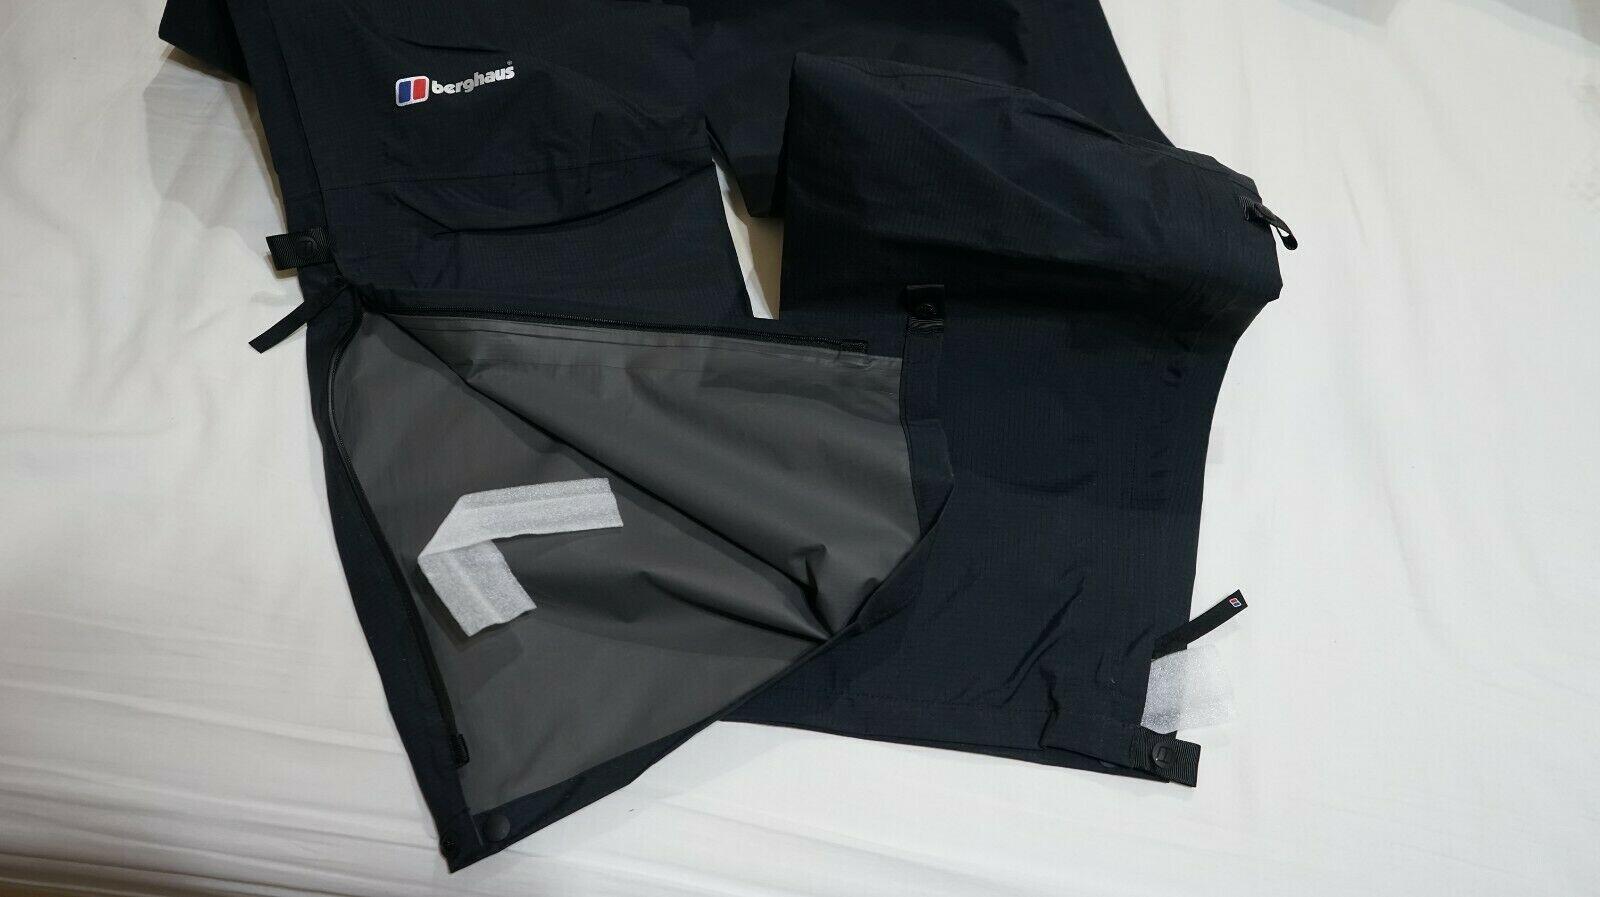 Berghaus Paclite waterproof trousers closeup 2